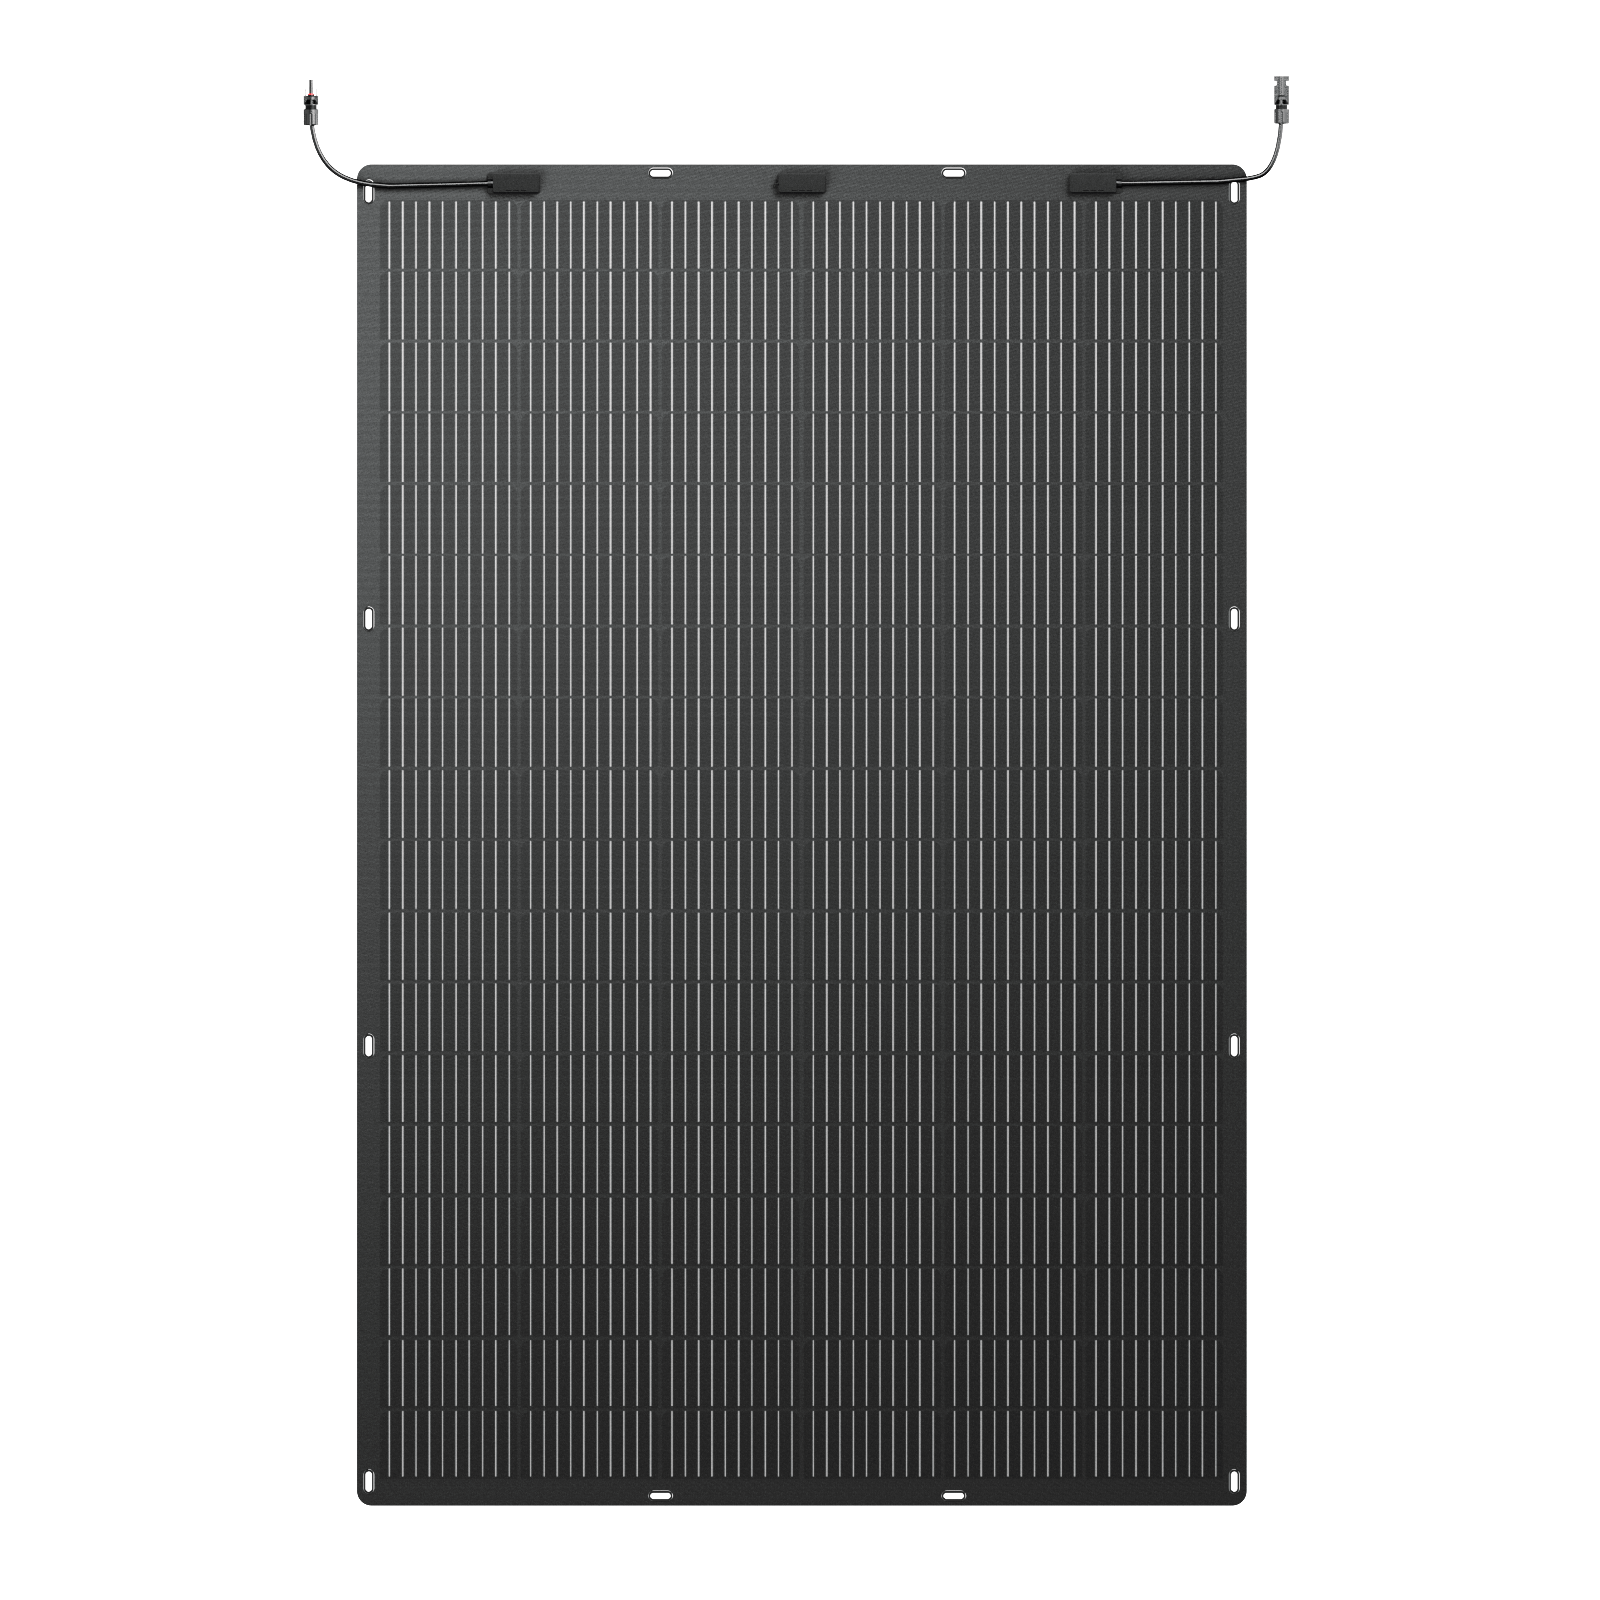 ALLPOWERS SF400 Flexible Solar Panel 400W